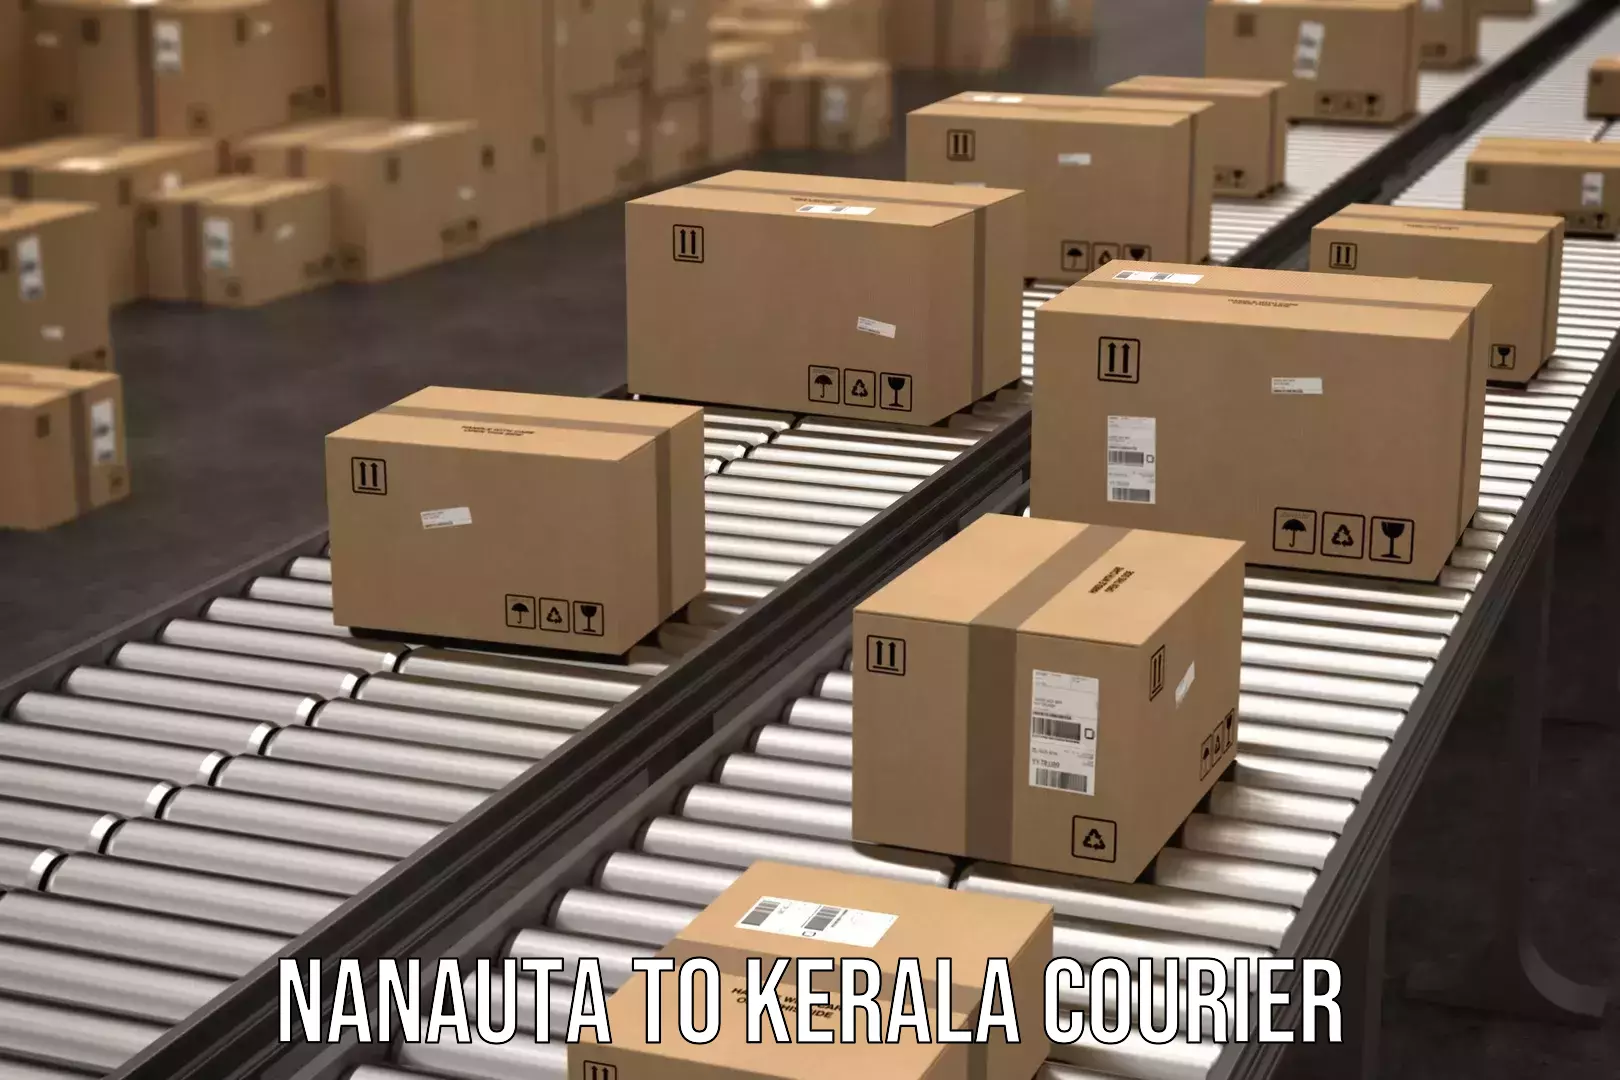 Global shipping networks Nanauta to Kochi